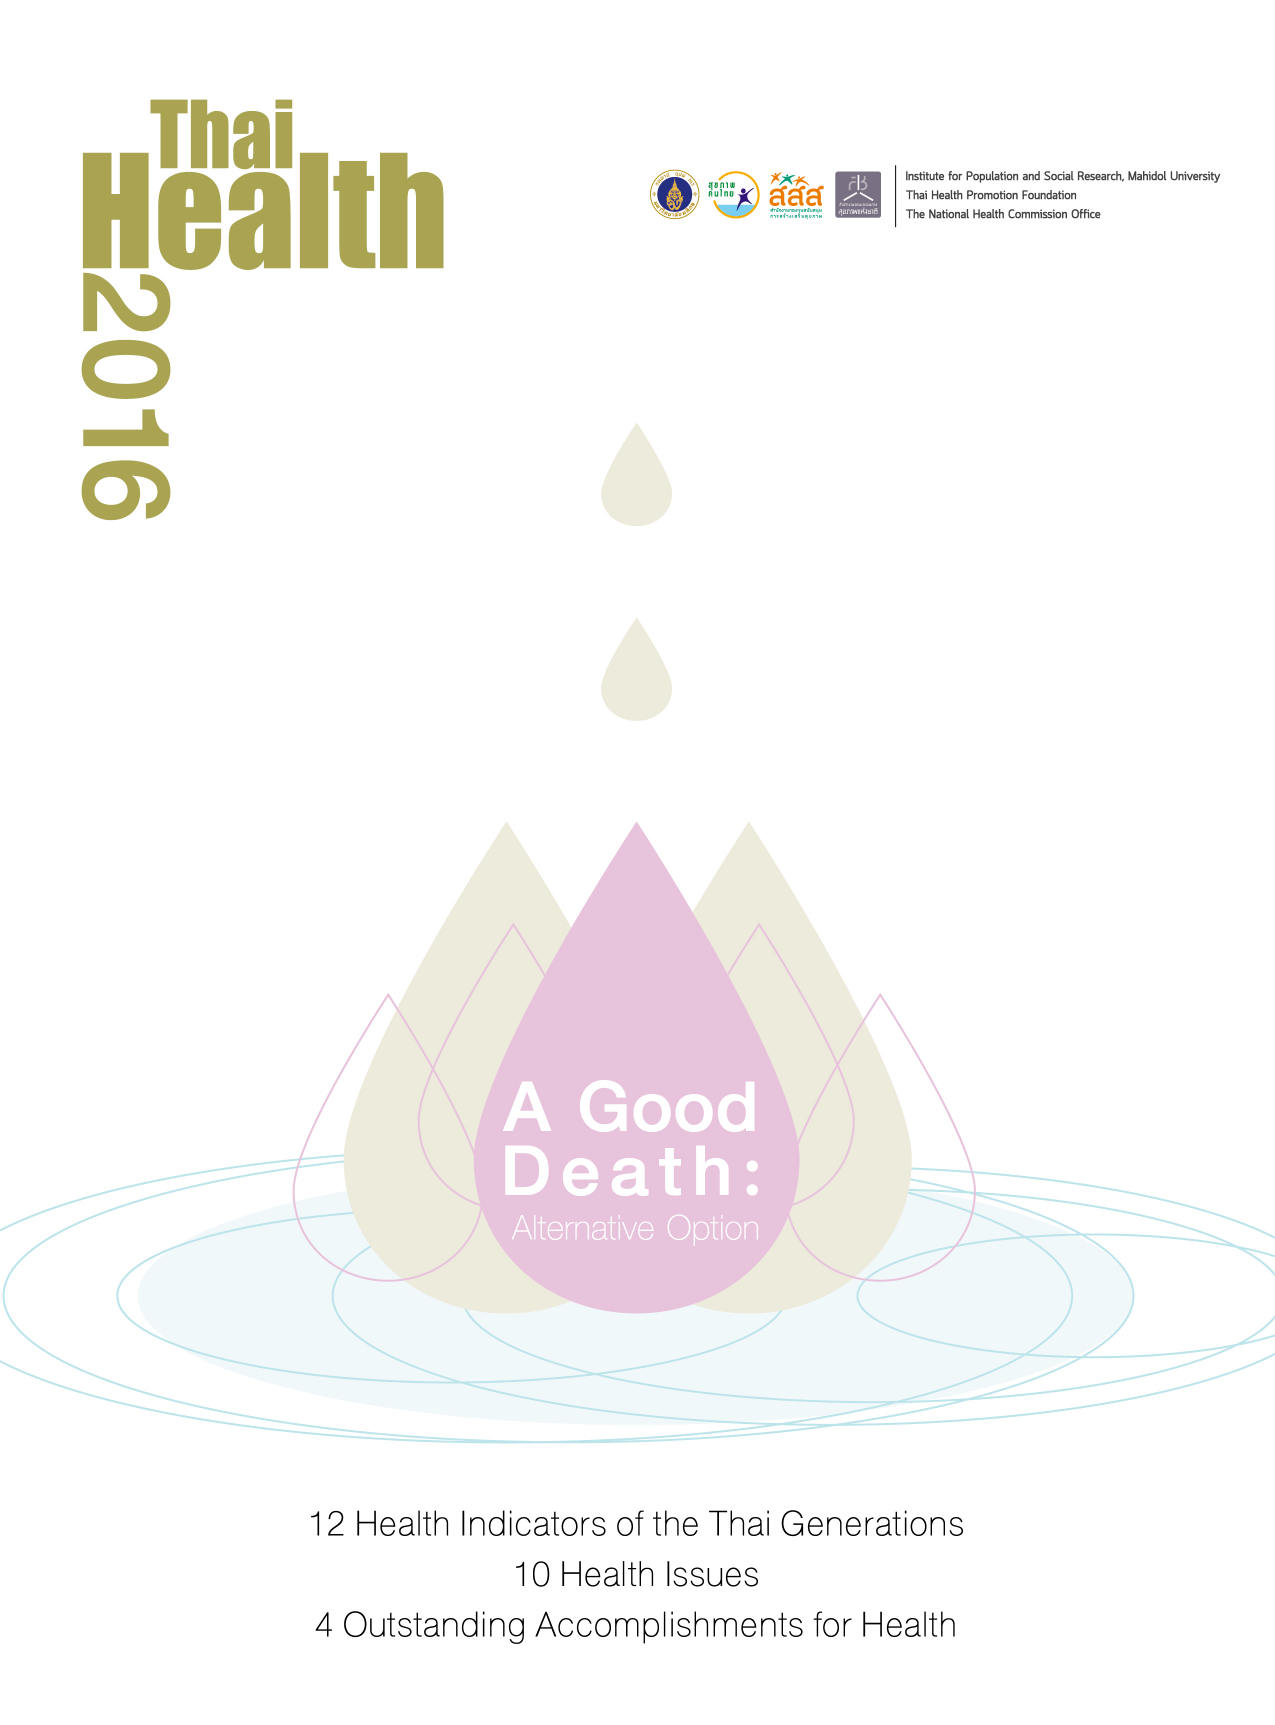 Thai Health 2016: A Good Death: Alternative Option